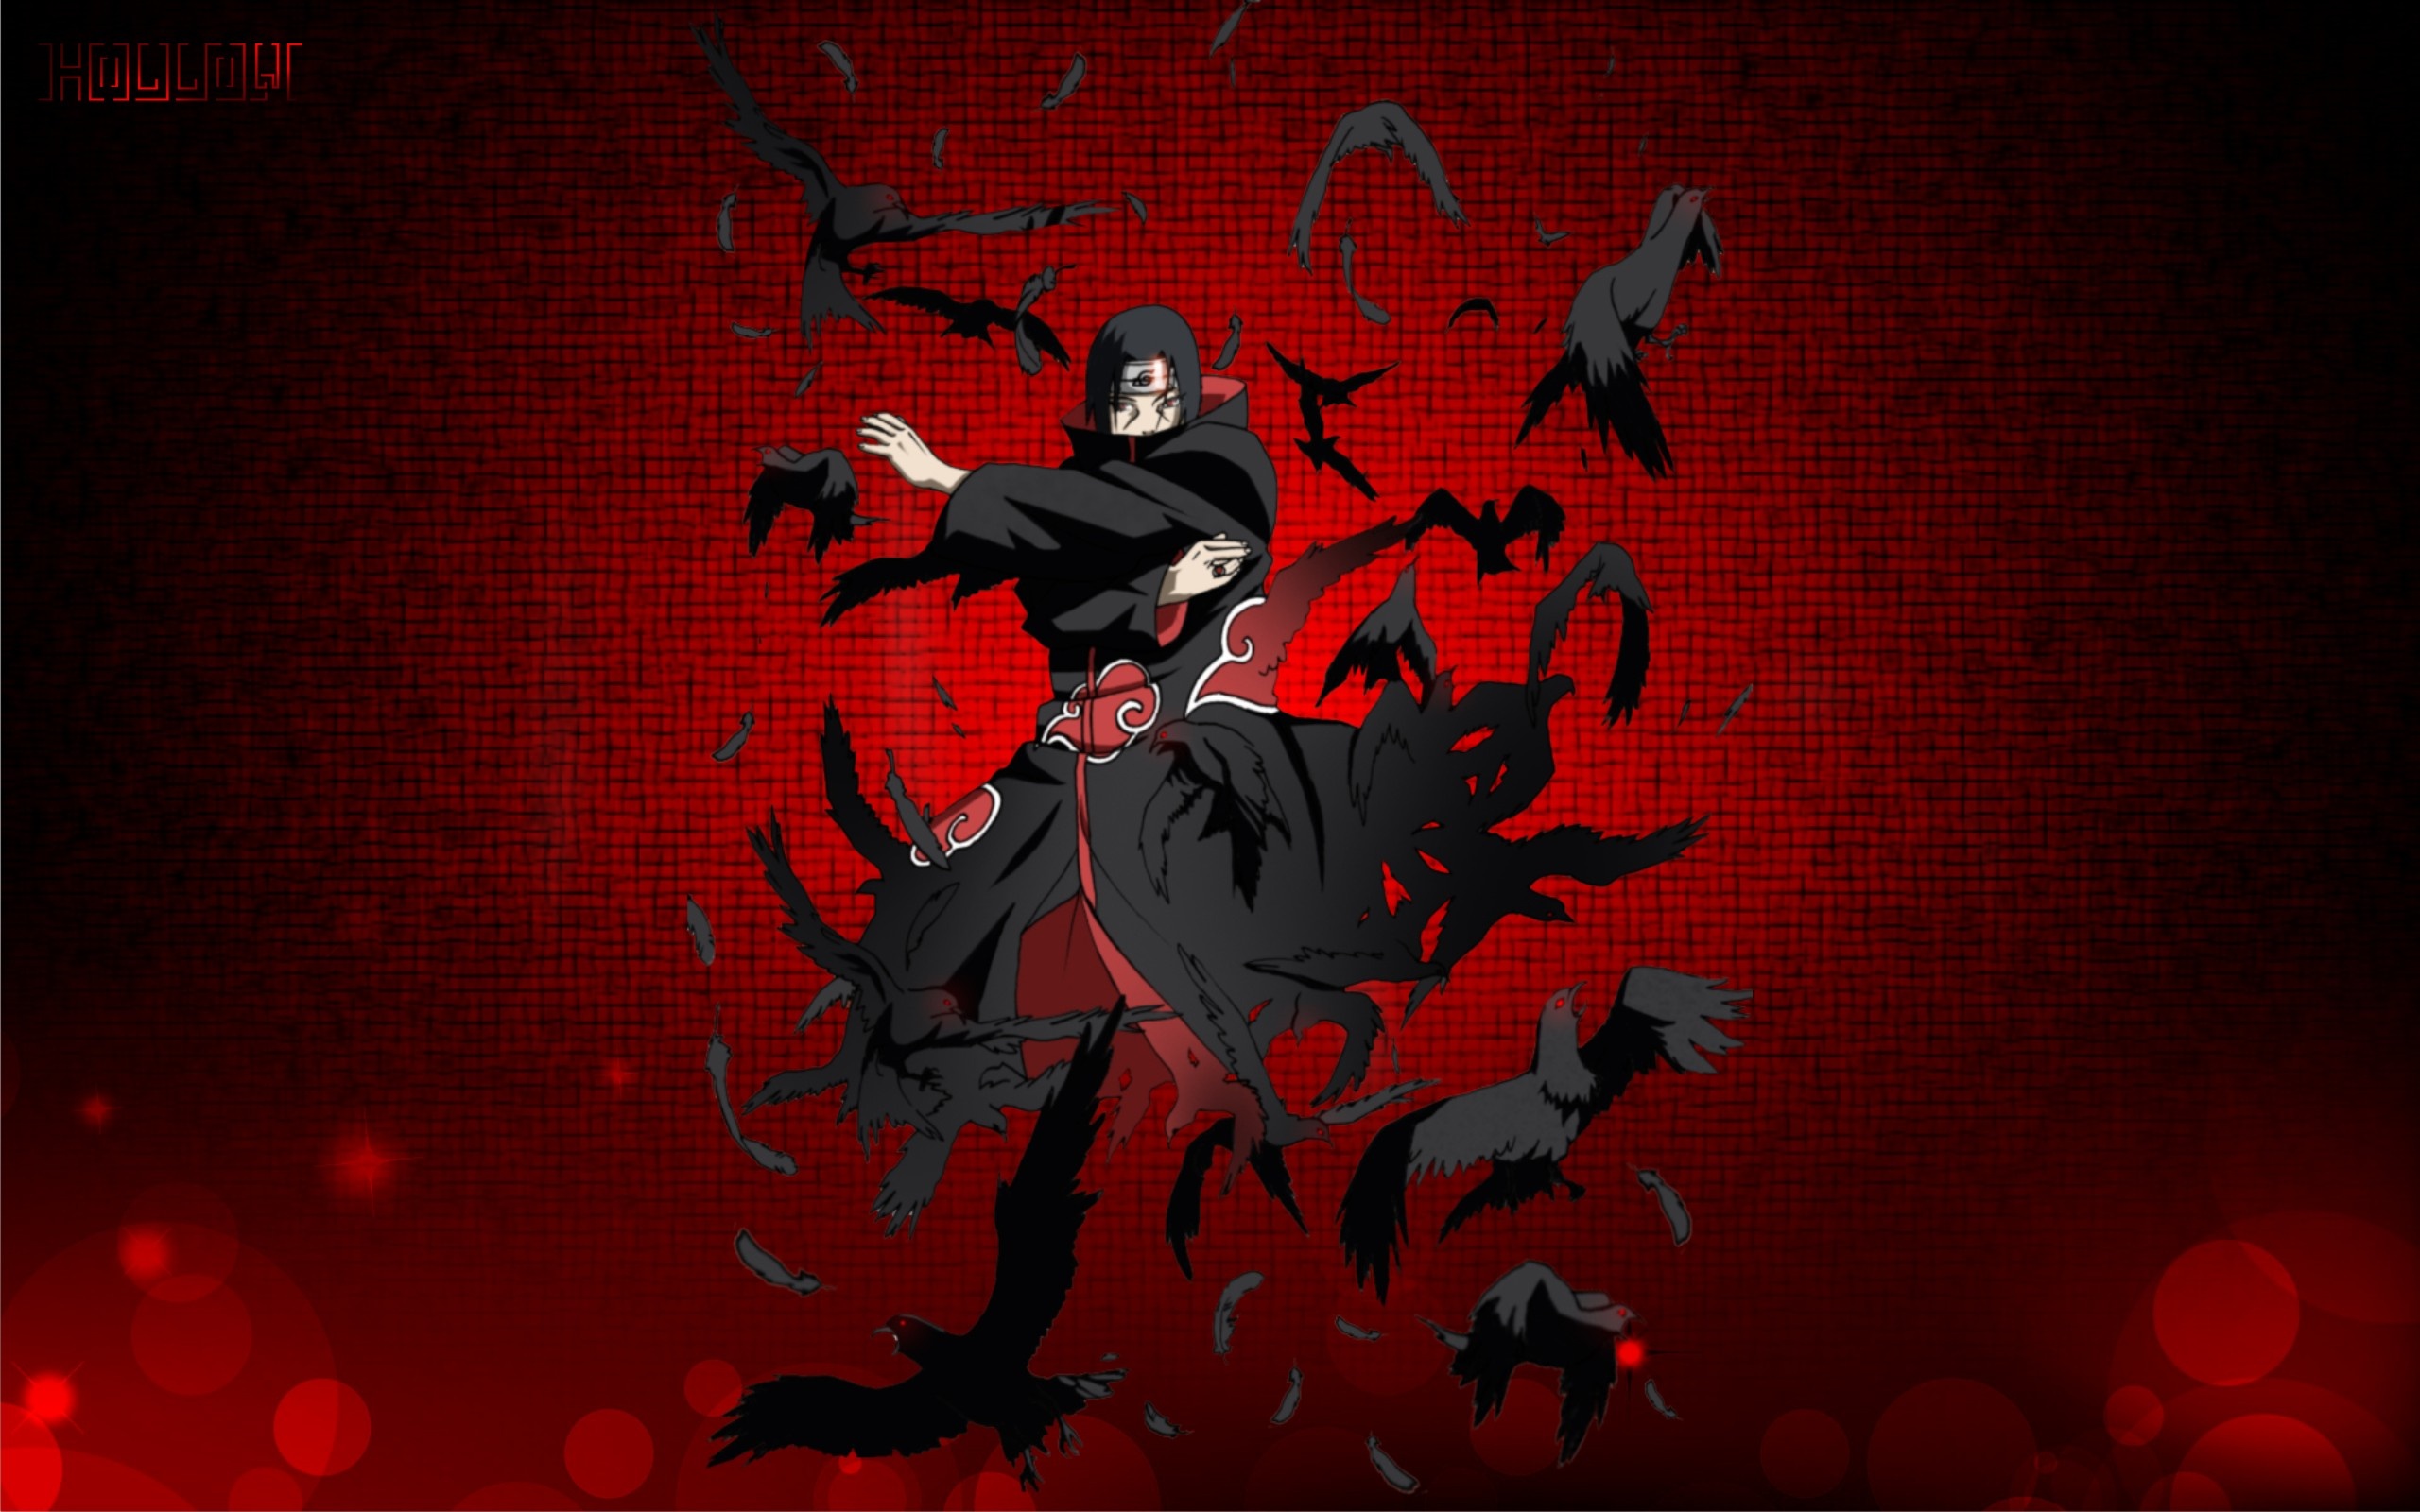 Itachi Uchiha - Anime desktop wallpaper from Naruto.